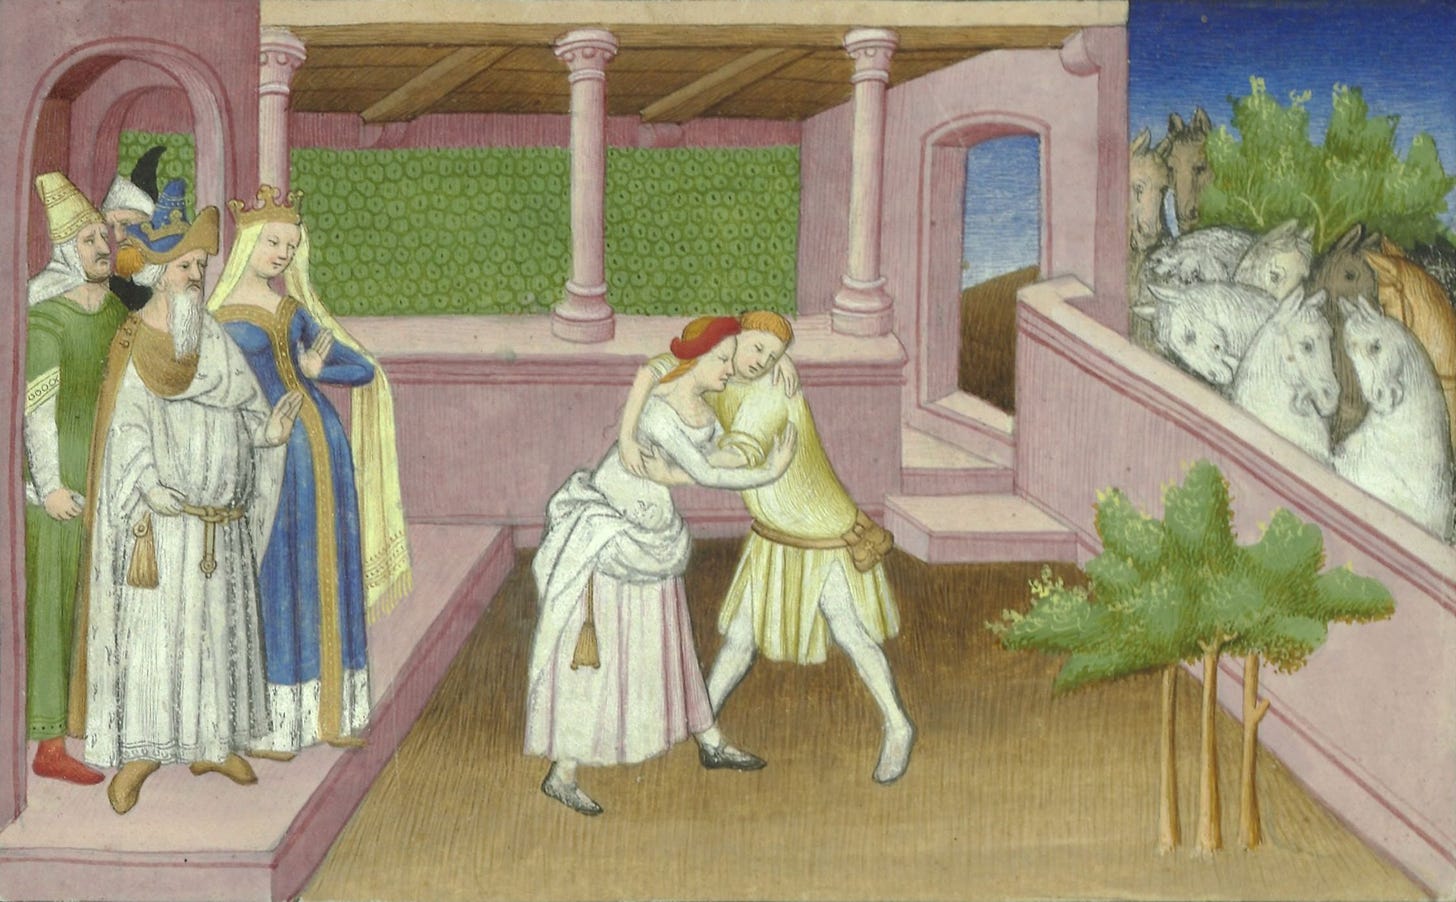 medieval depiction of Khutulun